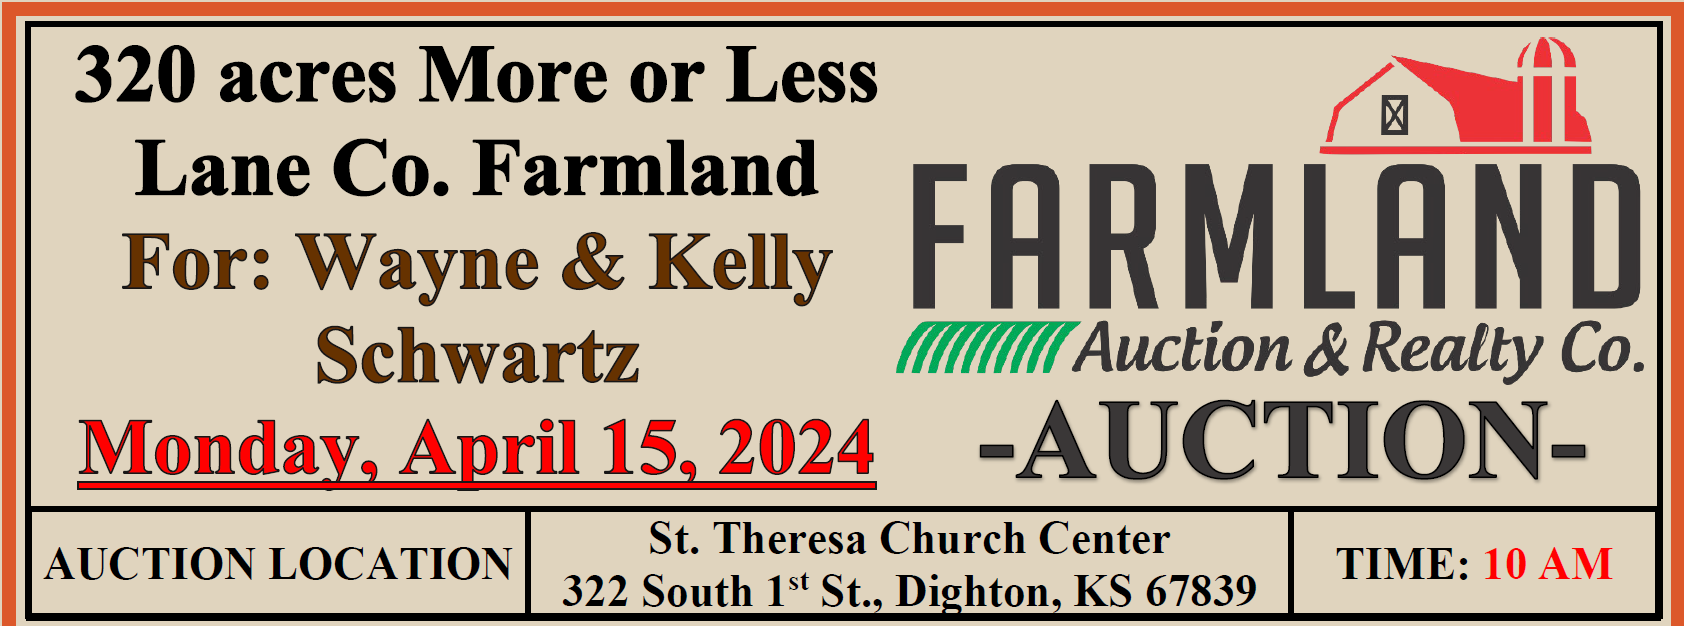 Auction flyer for *UNDER CONTRACT* AUCTION: 320 Acres +/- Lane Co. Farmland